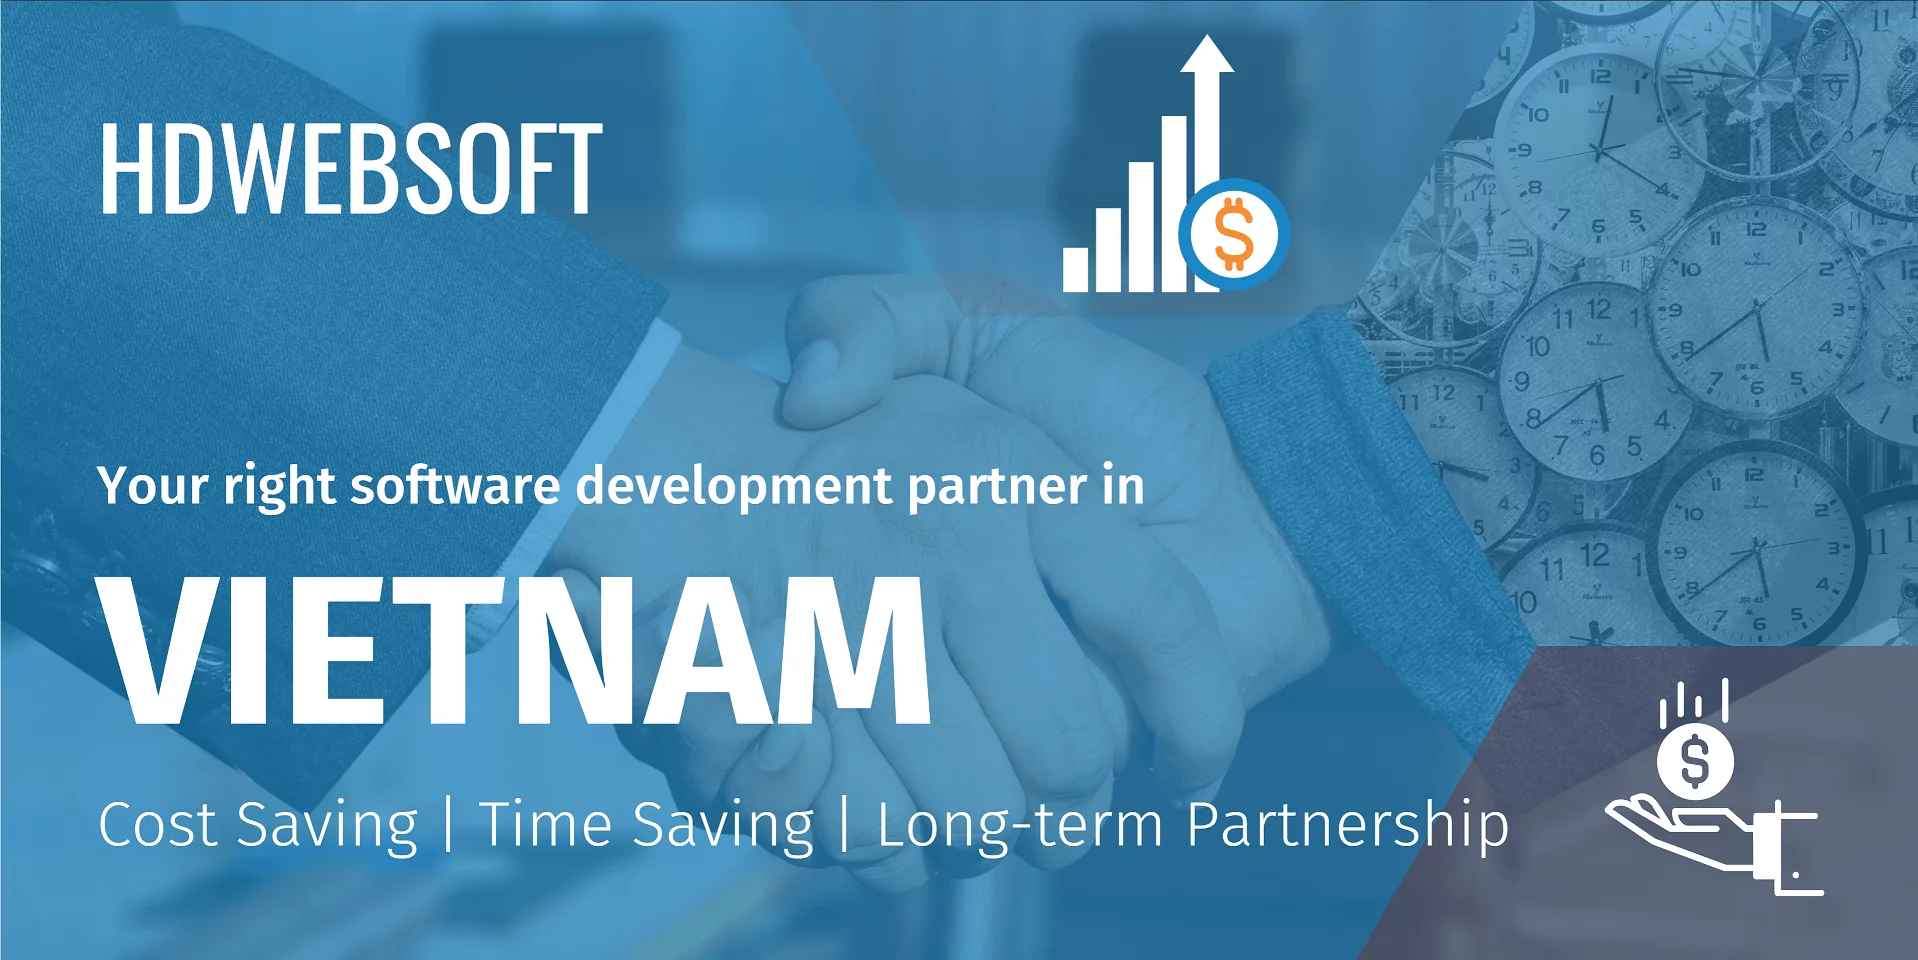 The right software development partner in Vietnam